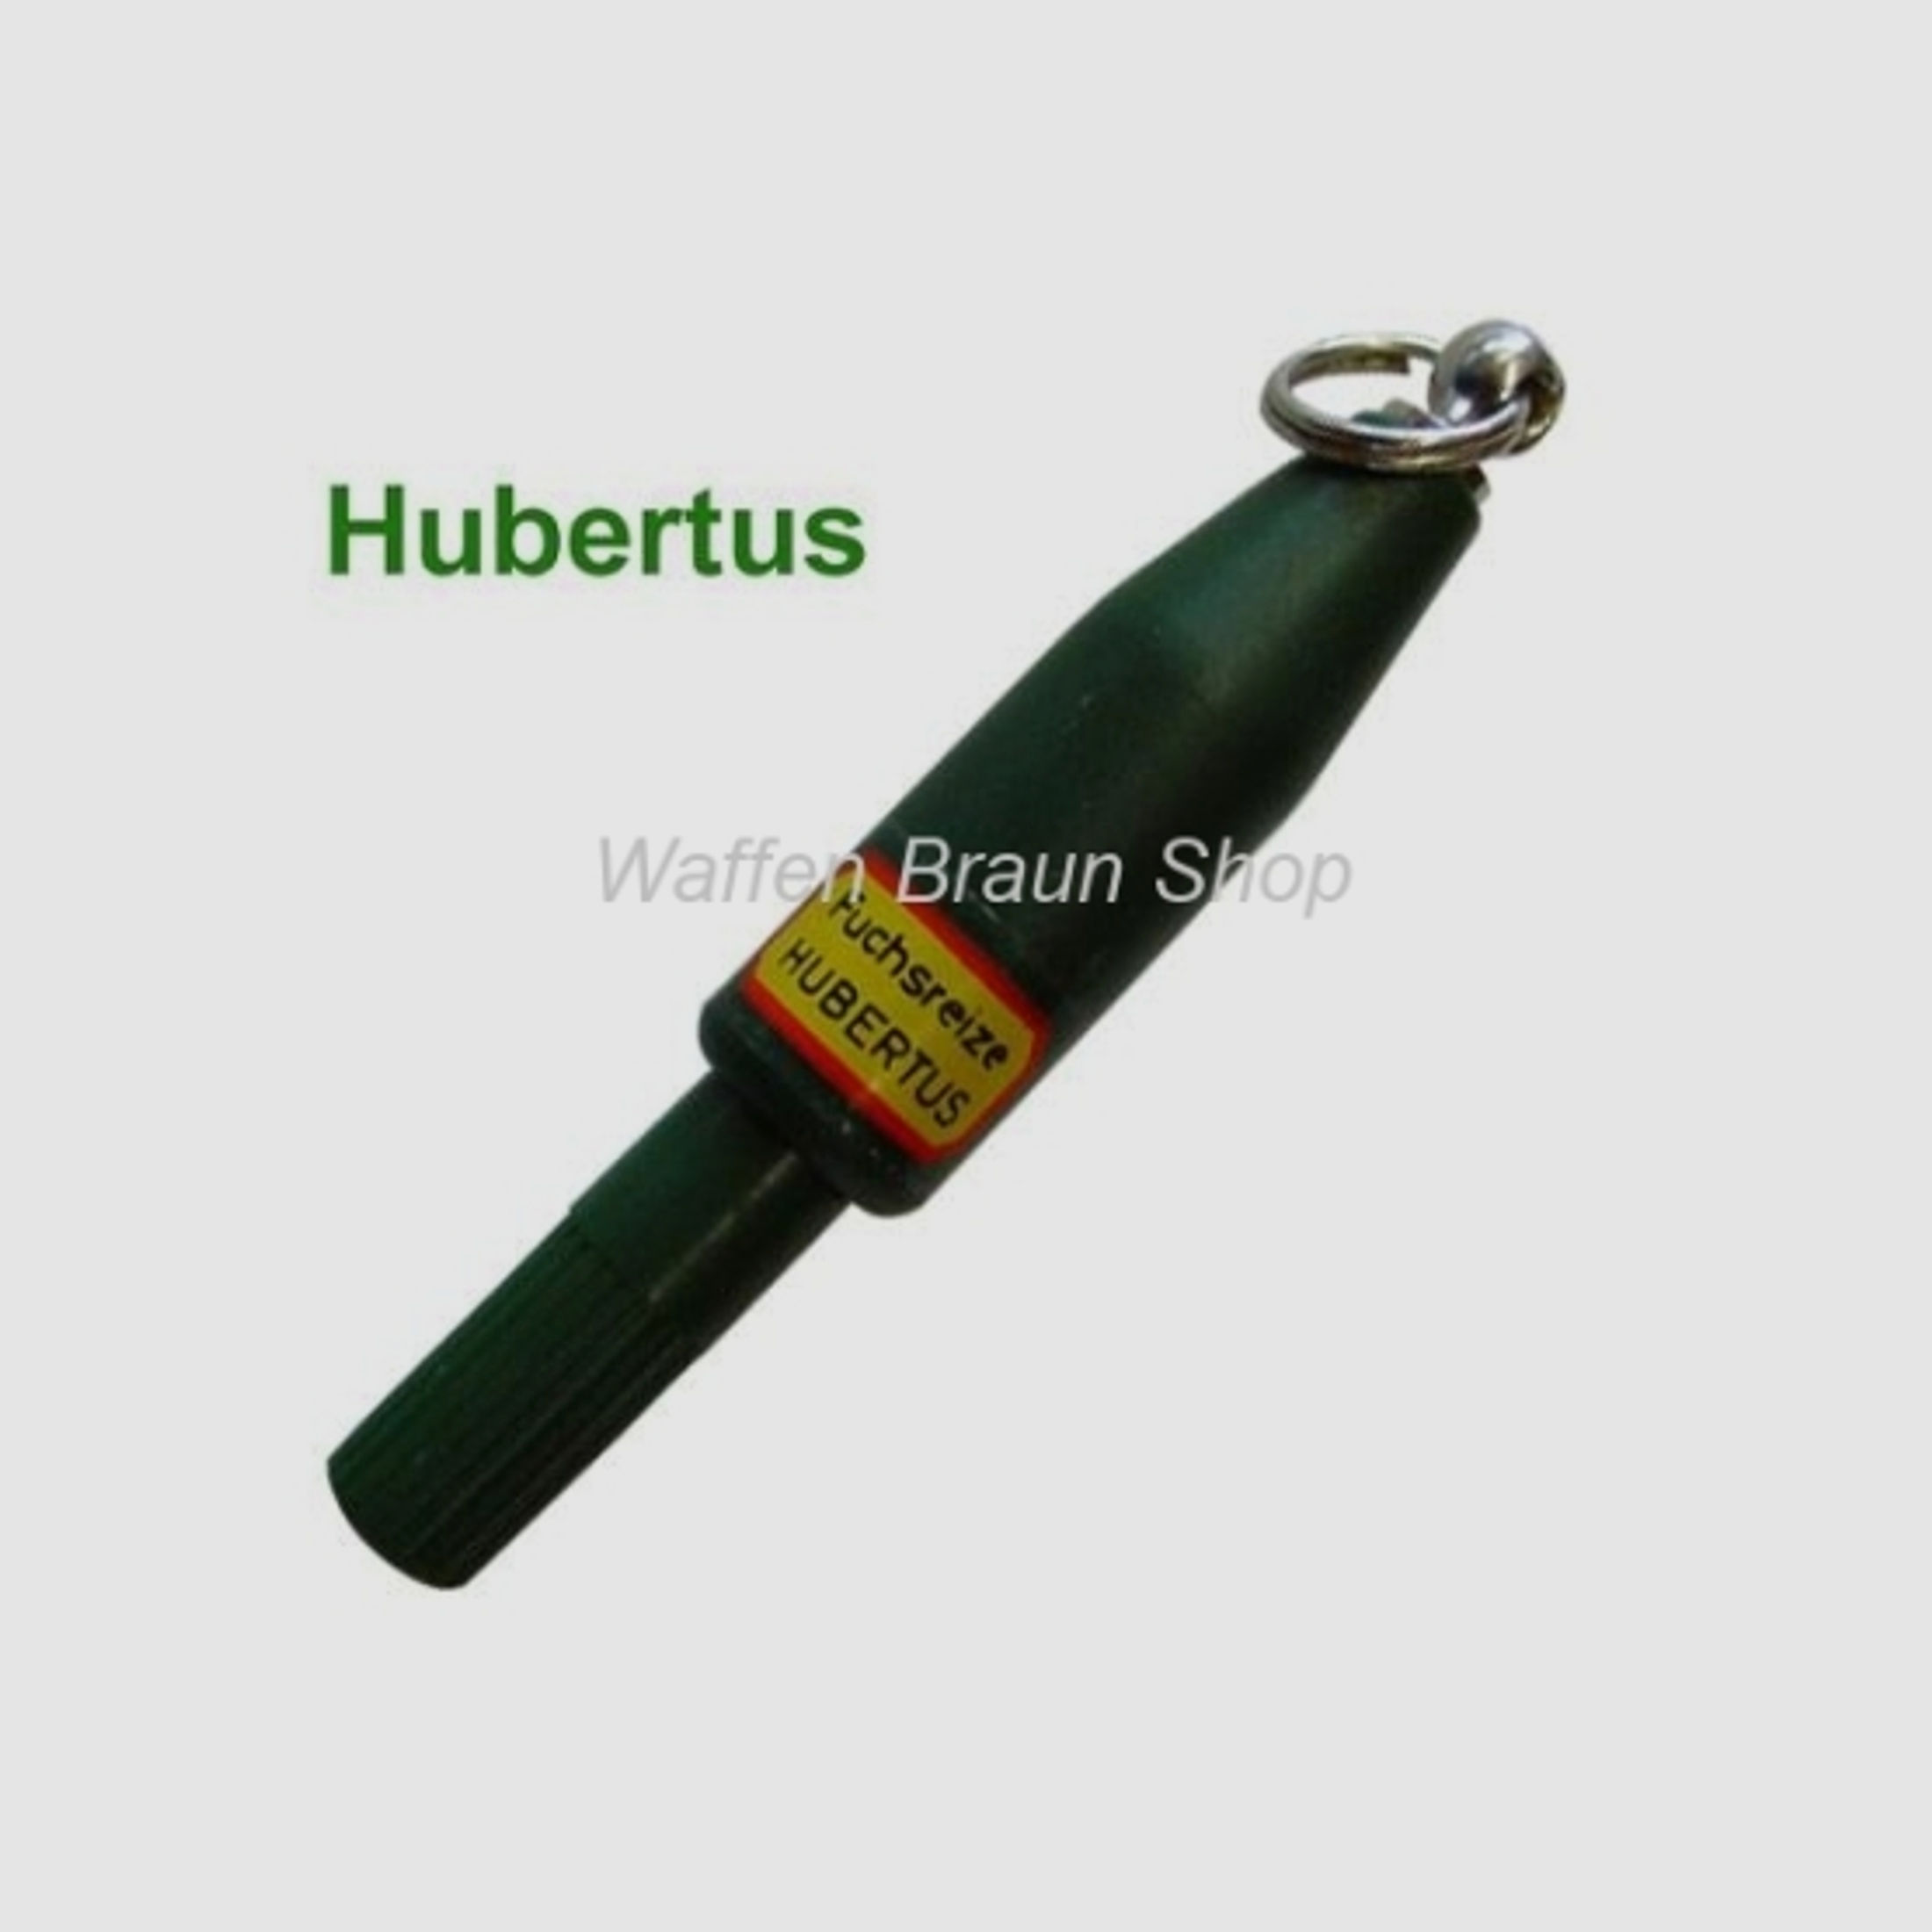 HUBERTUS Mauspfeifchen aus Kunststoff.6 cm lang